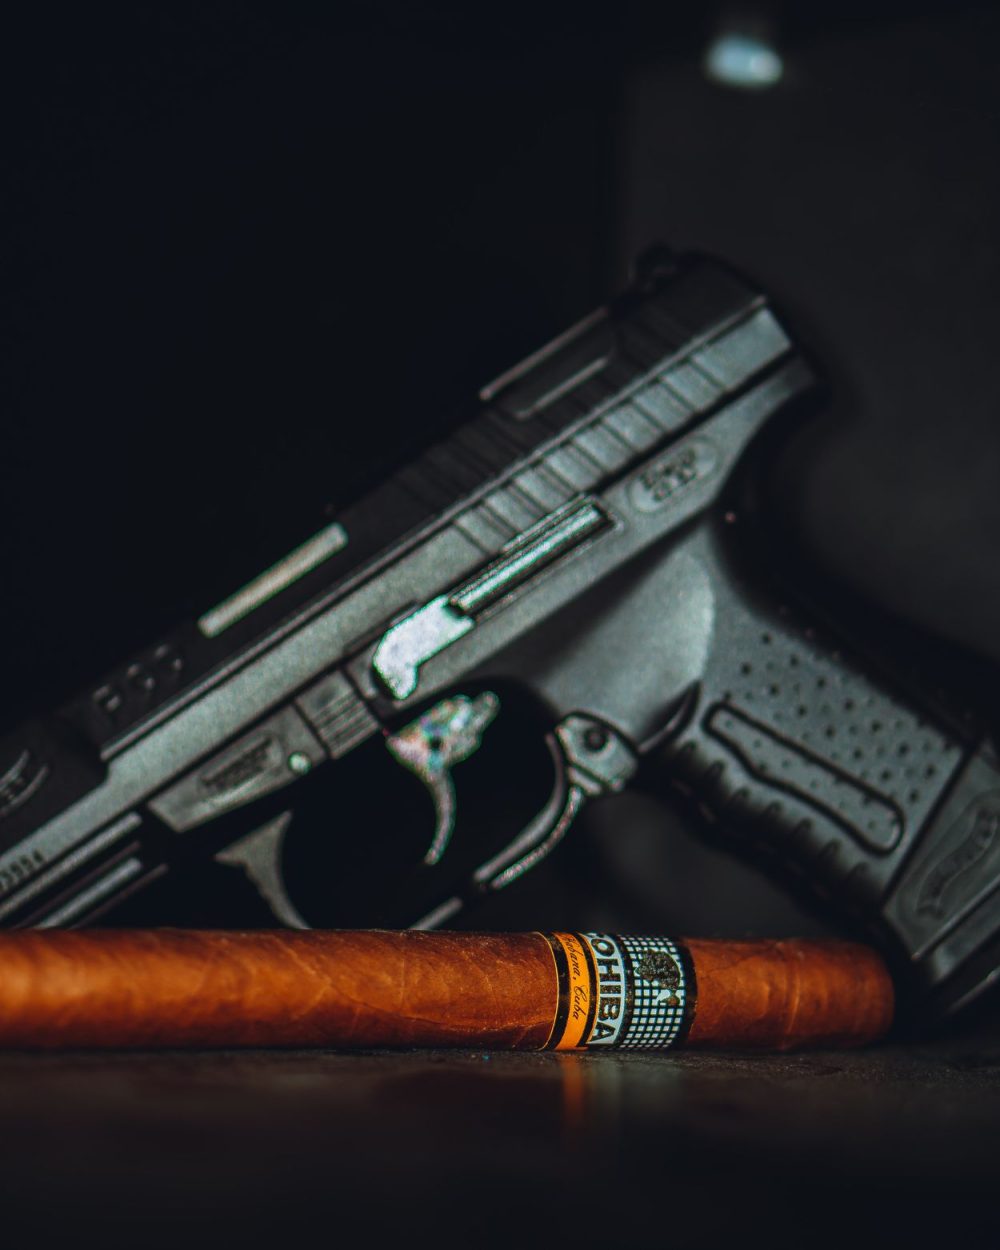 A gun next to a tobacco